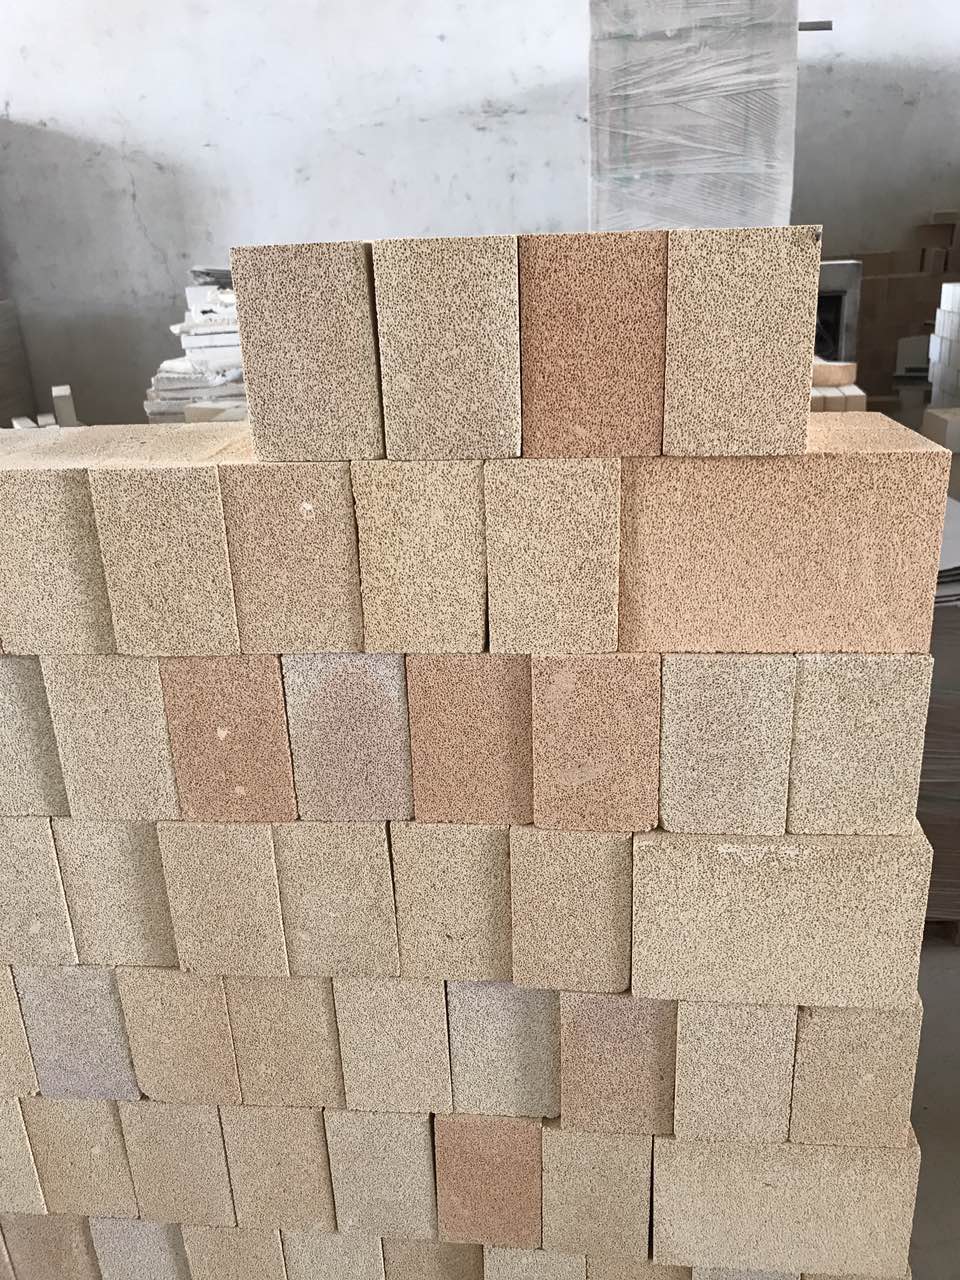 Insulation brick